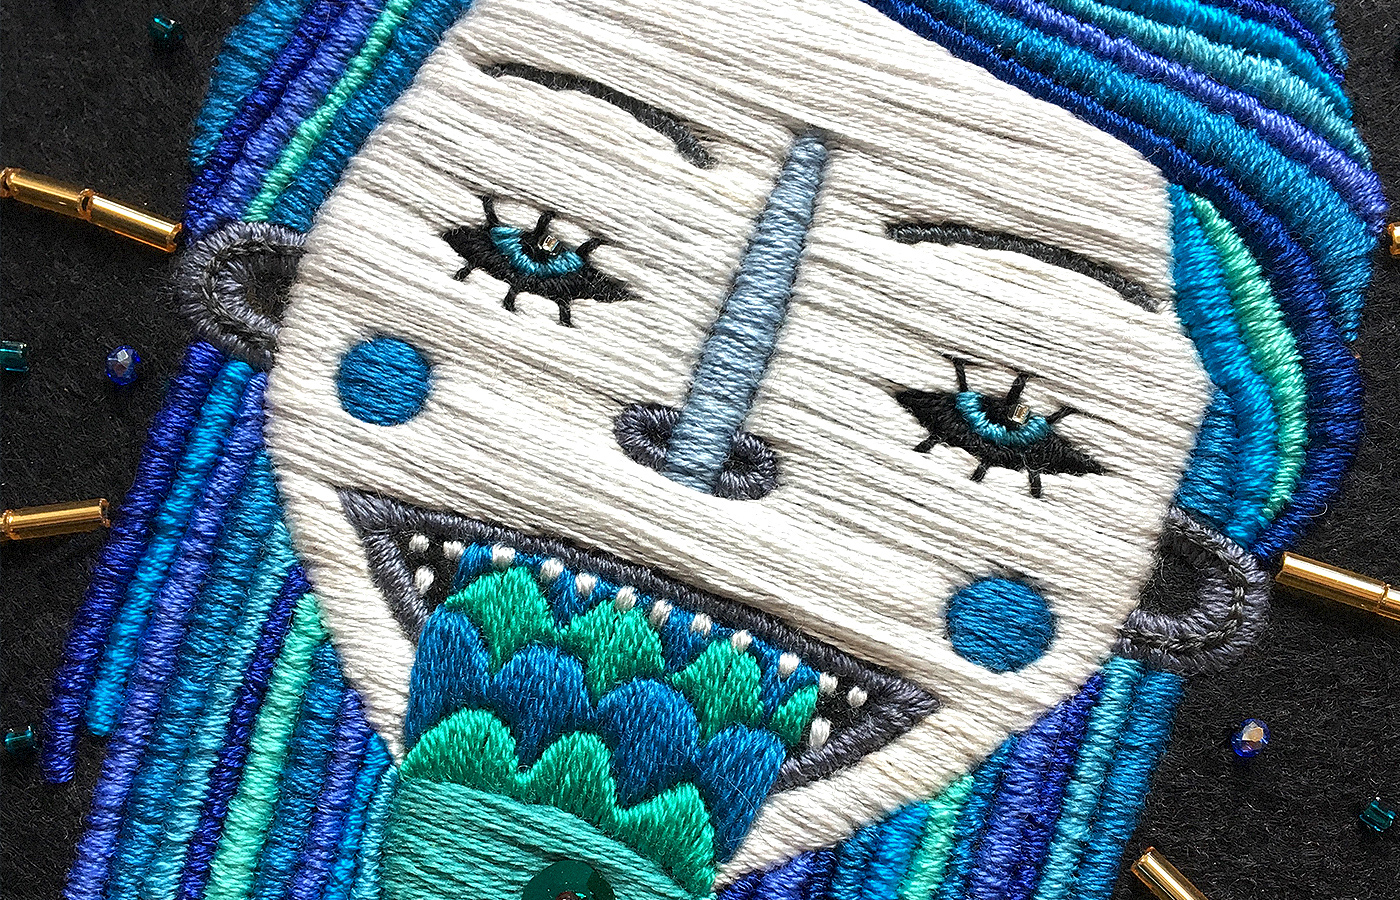 Embroidery isoì gaiabernasconi ILLUSTRATION  Embroideryart embroidered textile design